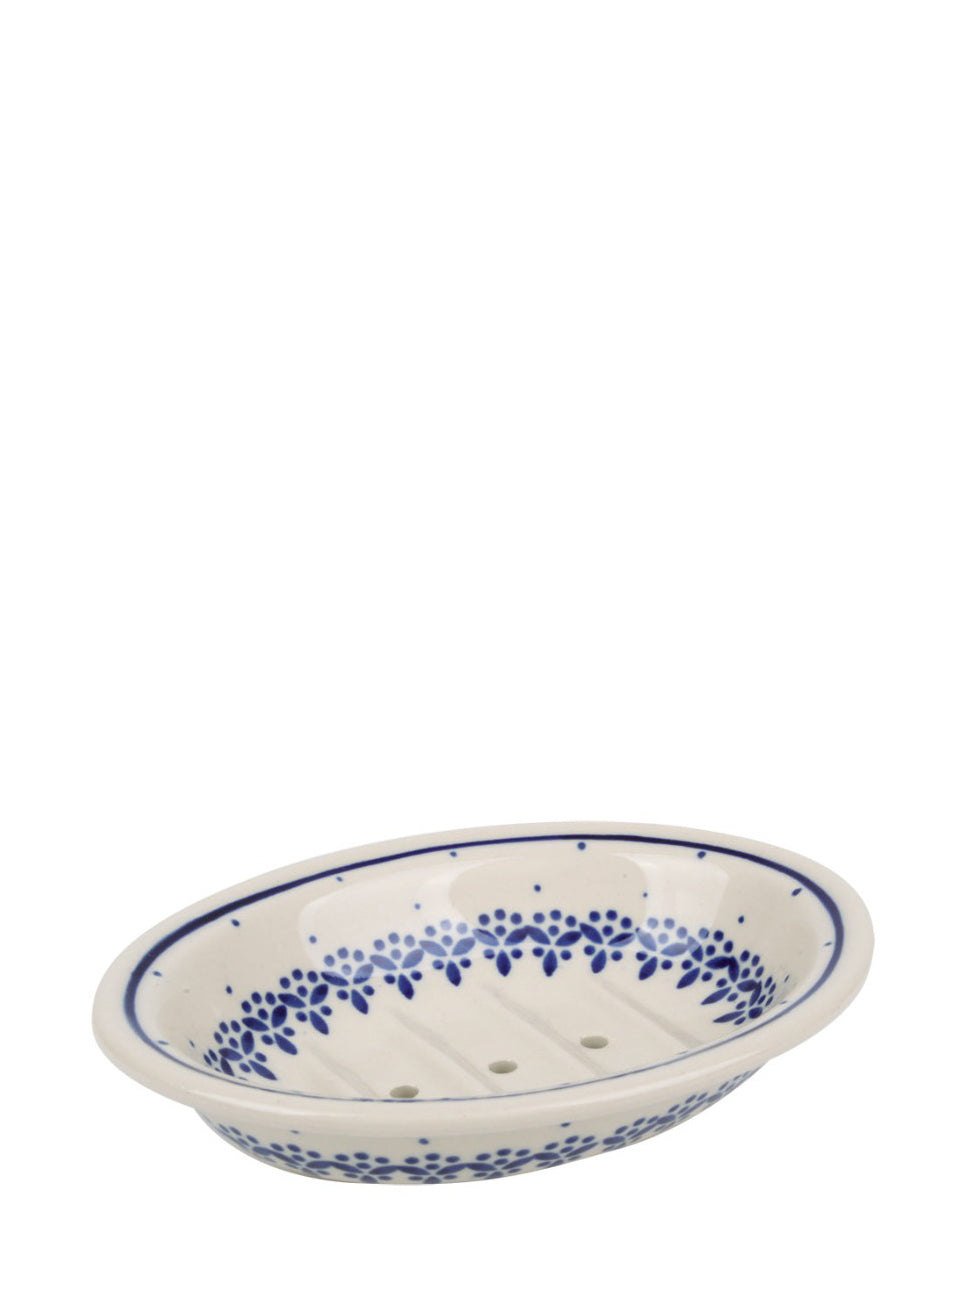 Ceramic soap dish, blue vine pattern